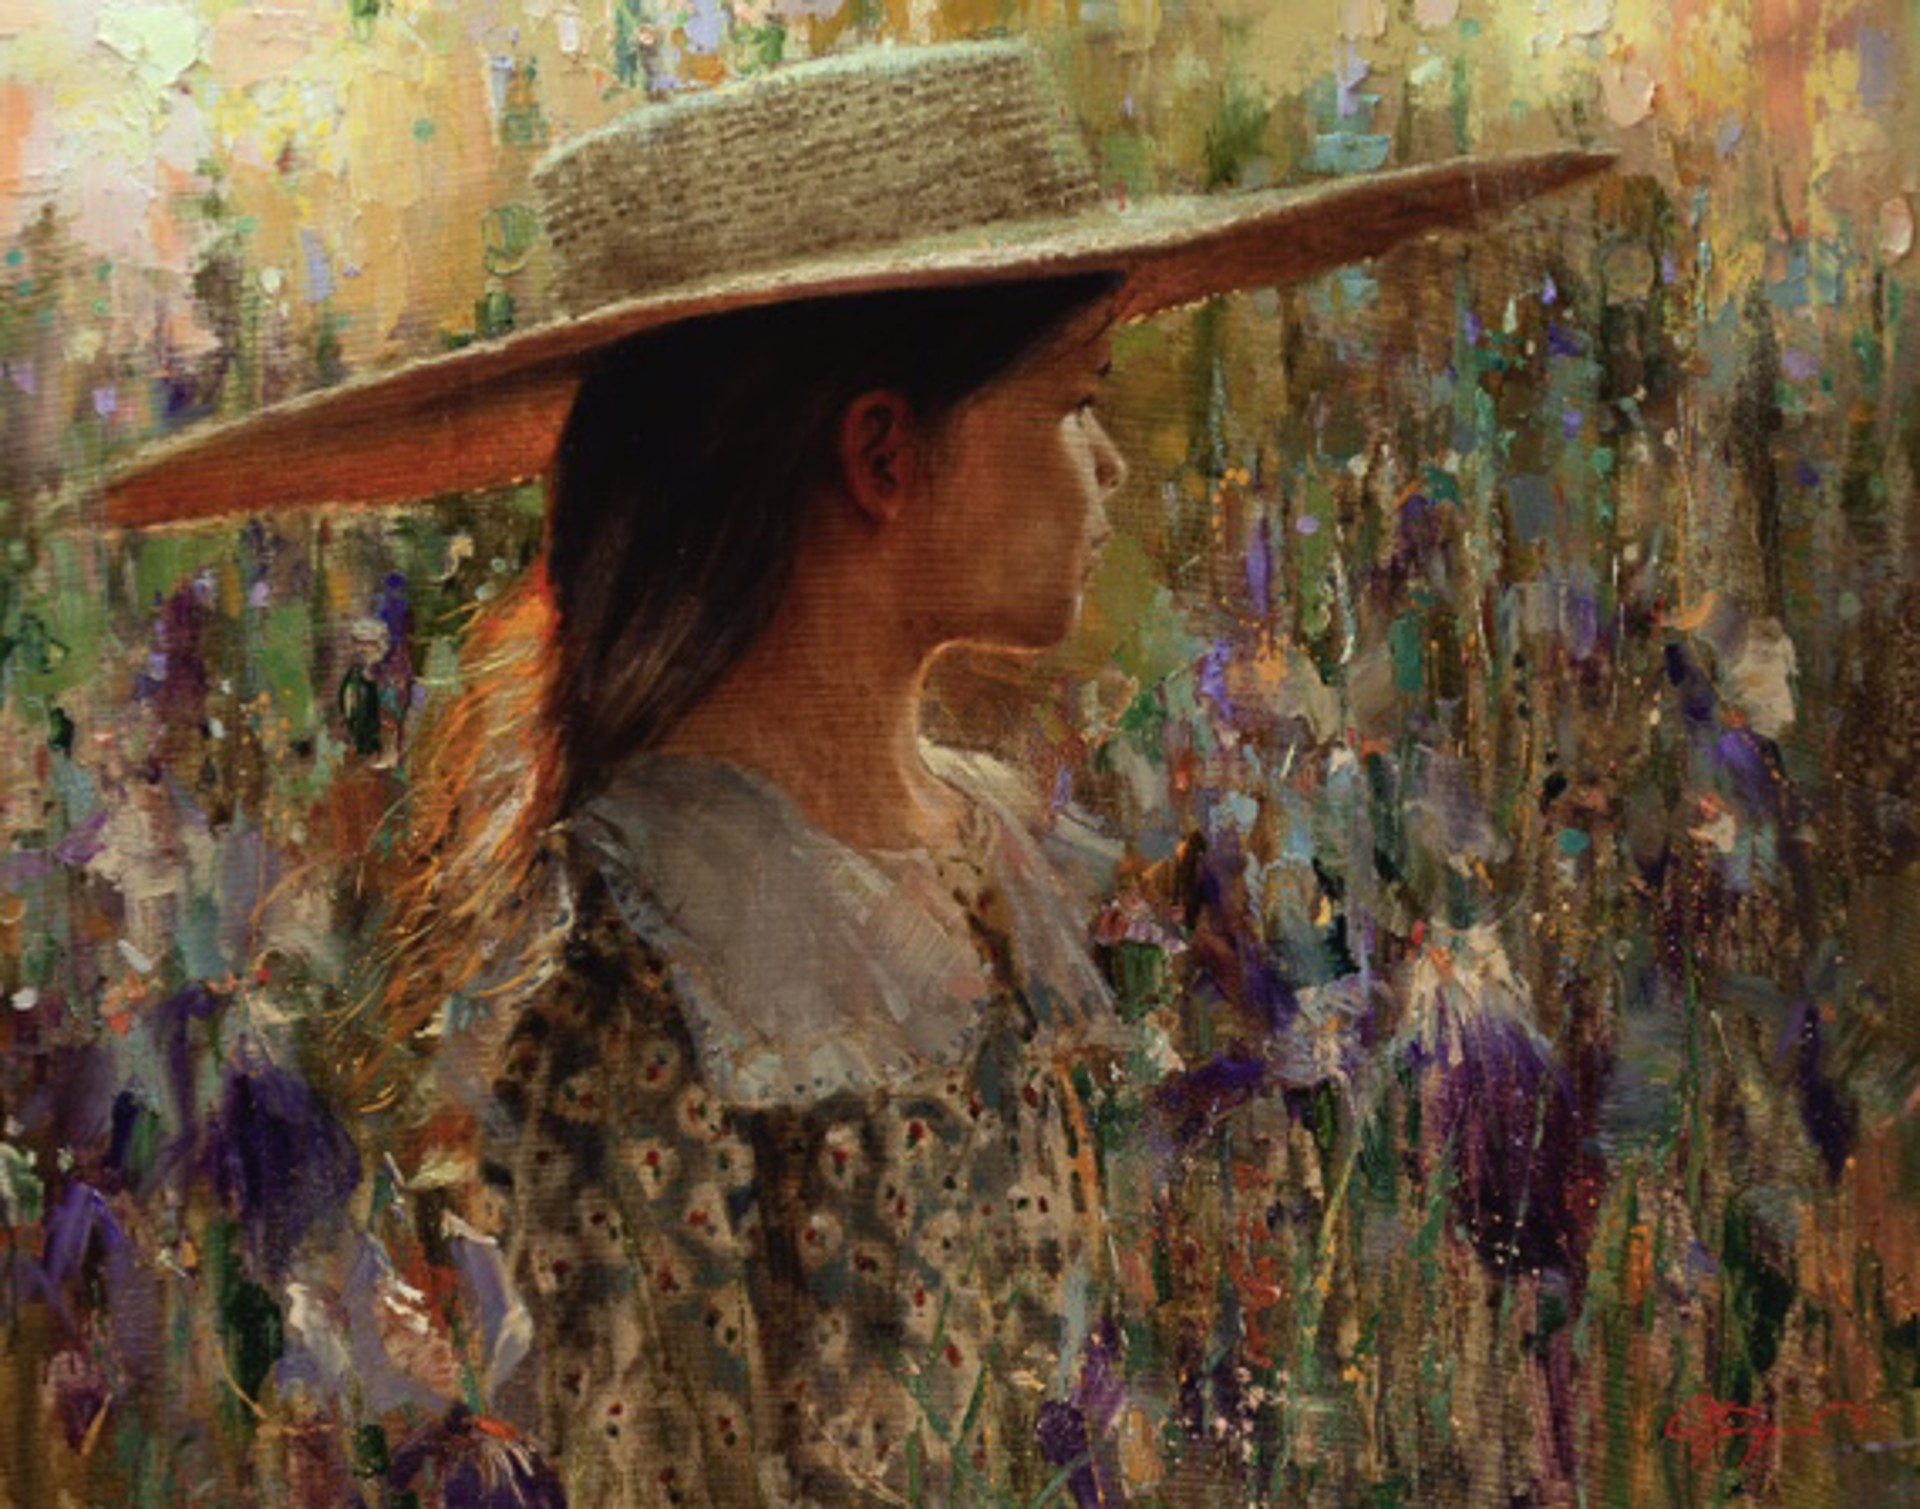 "Girl in Straw Hat" by Oleg Trofimov